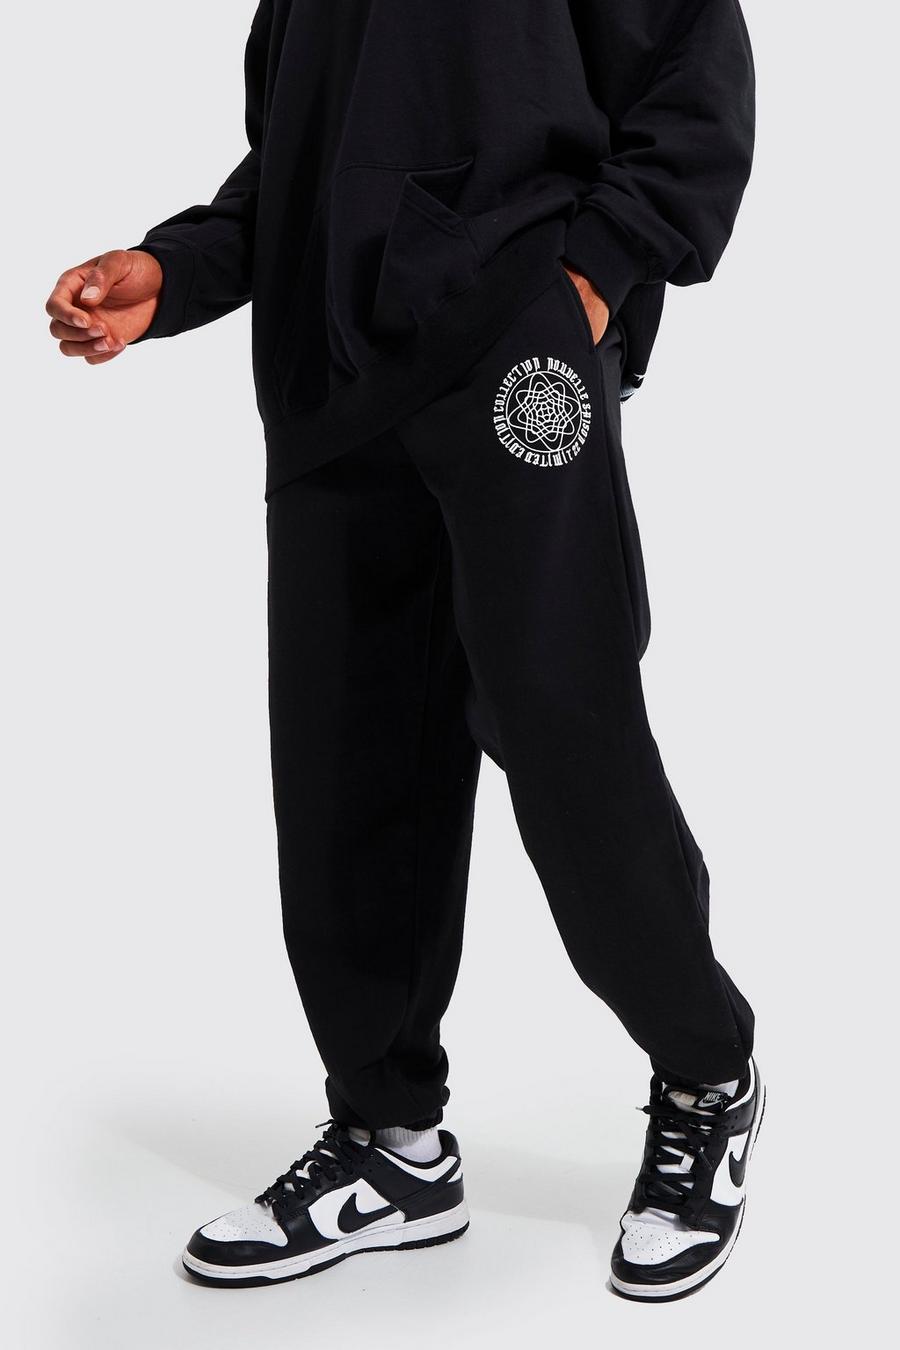 Pantalón deportivo oversize con estampado Limited Collection, Black nero